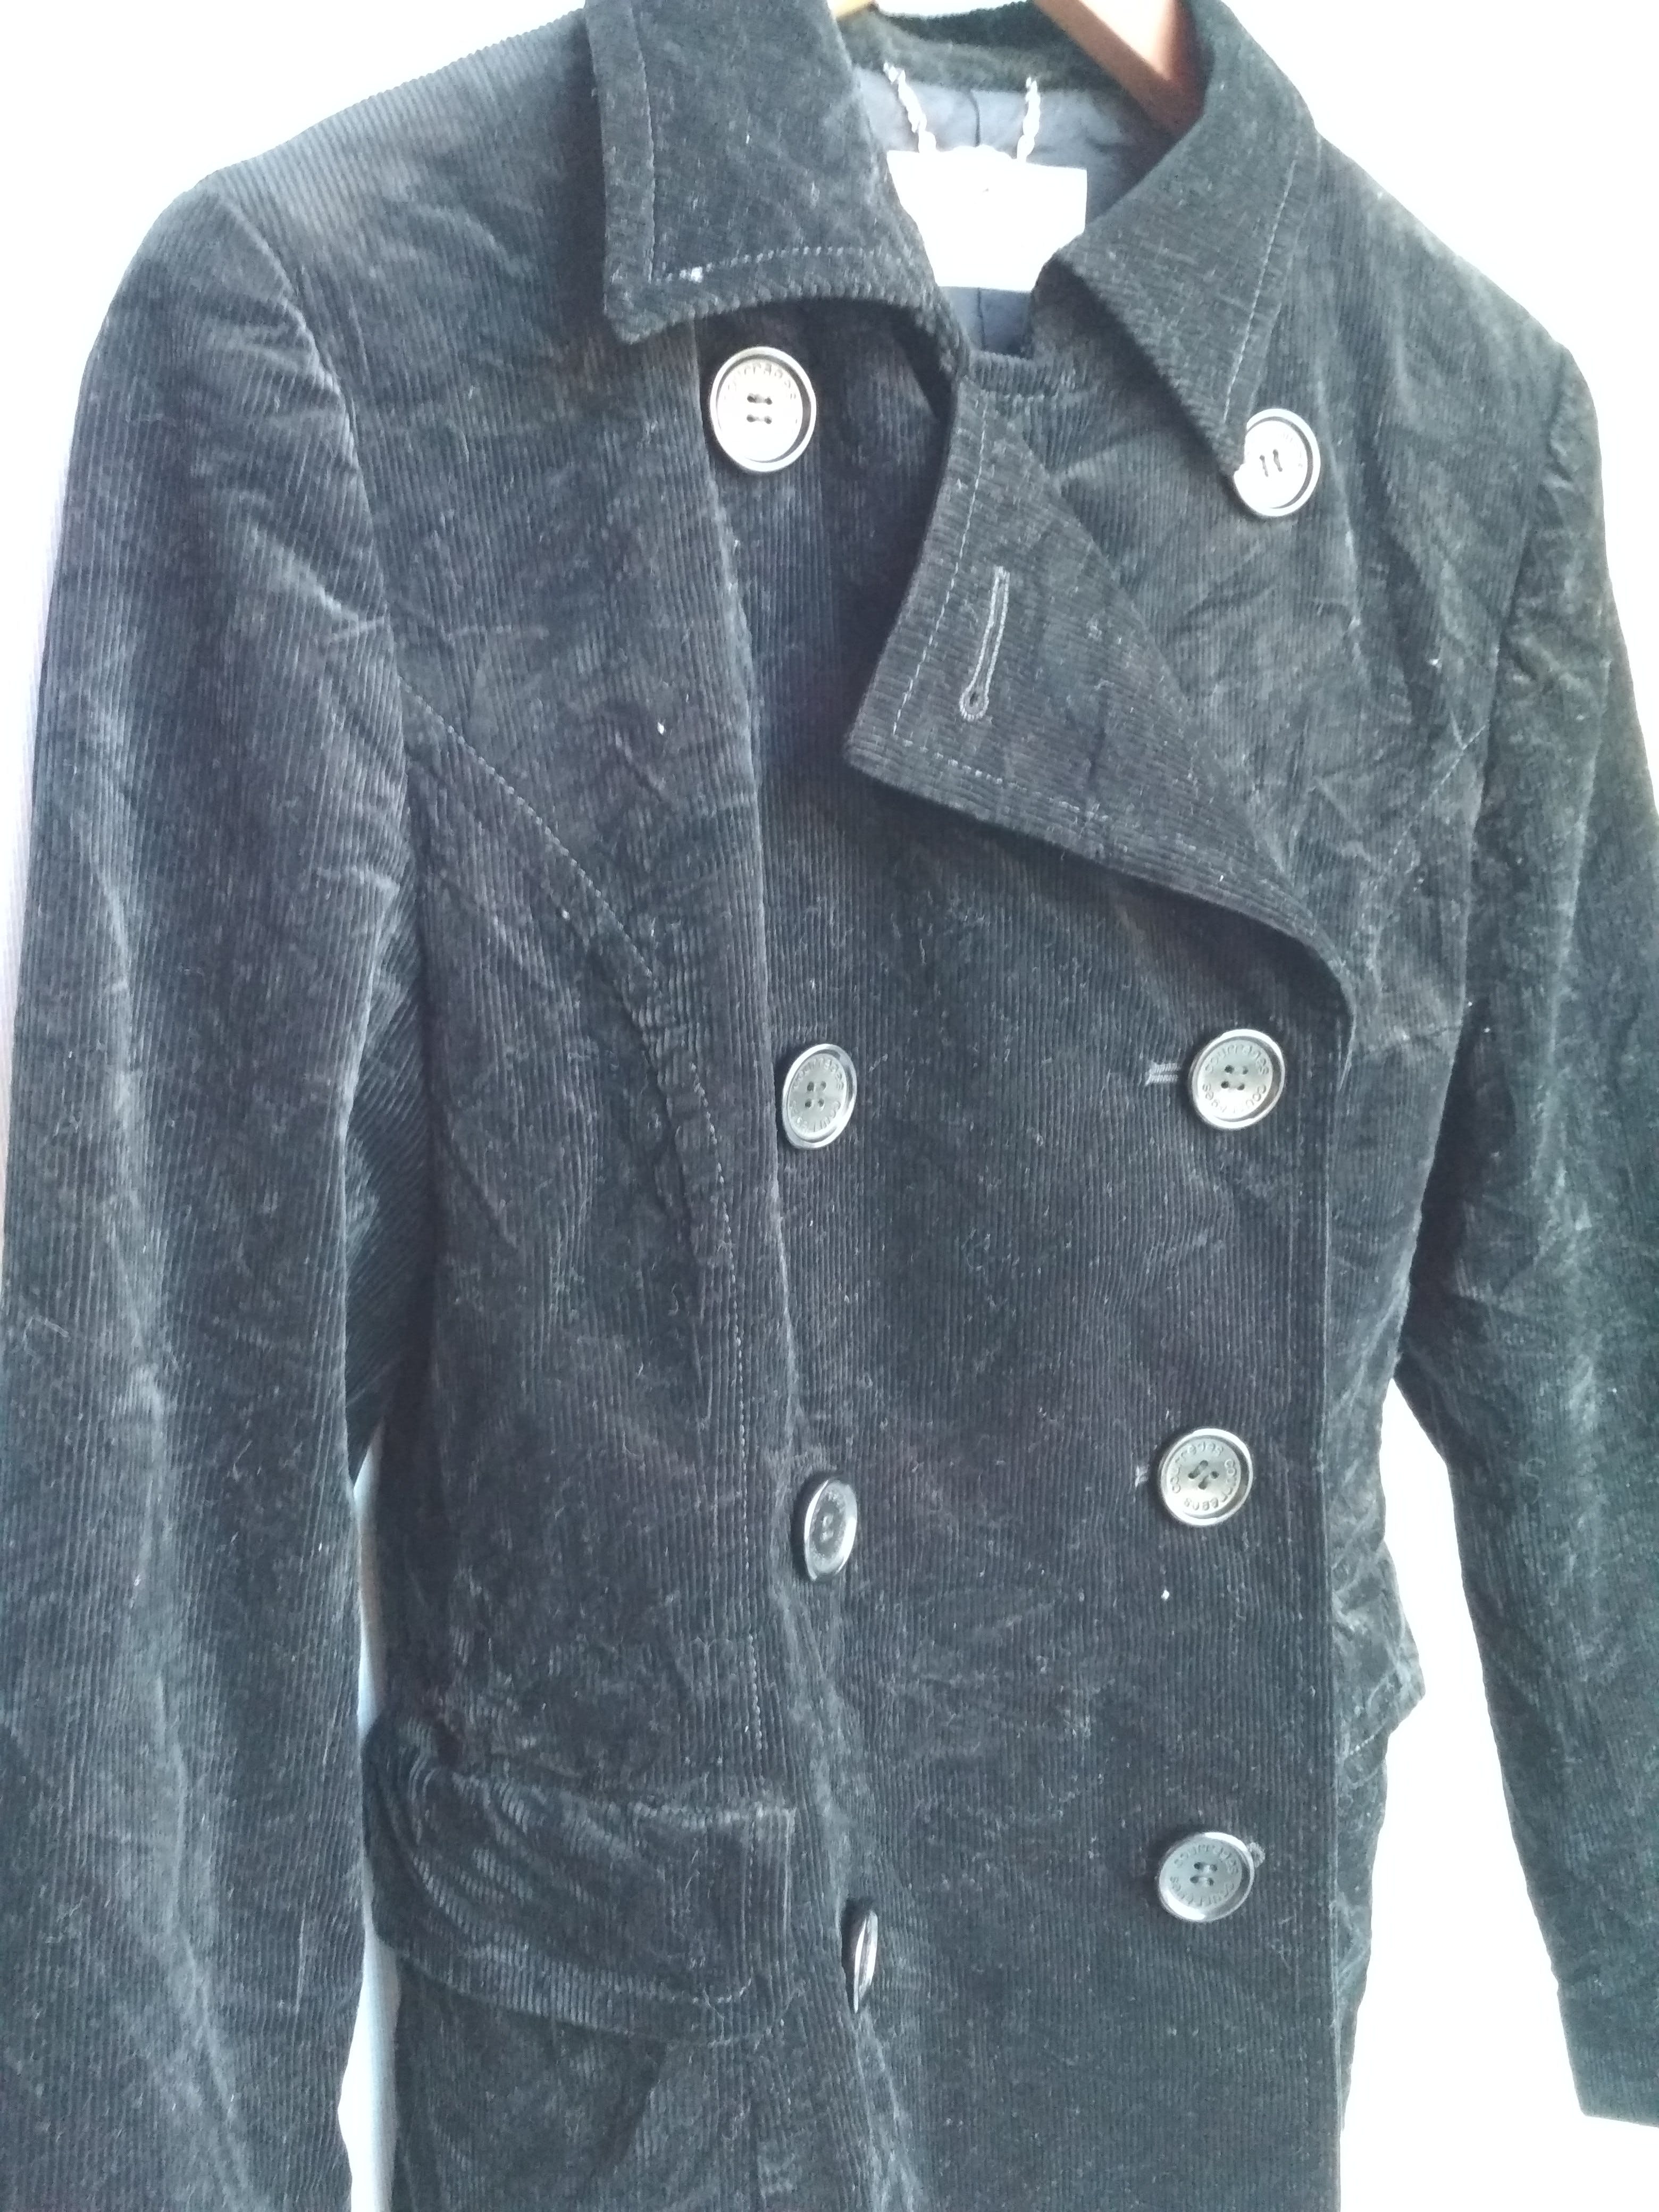 courreges black corduroy double breasted jacket - 2